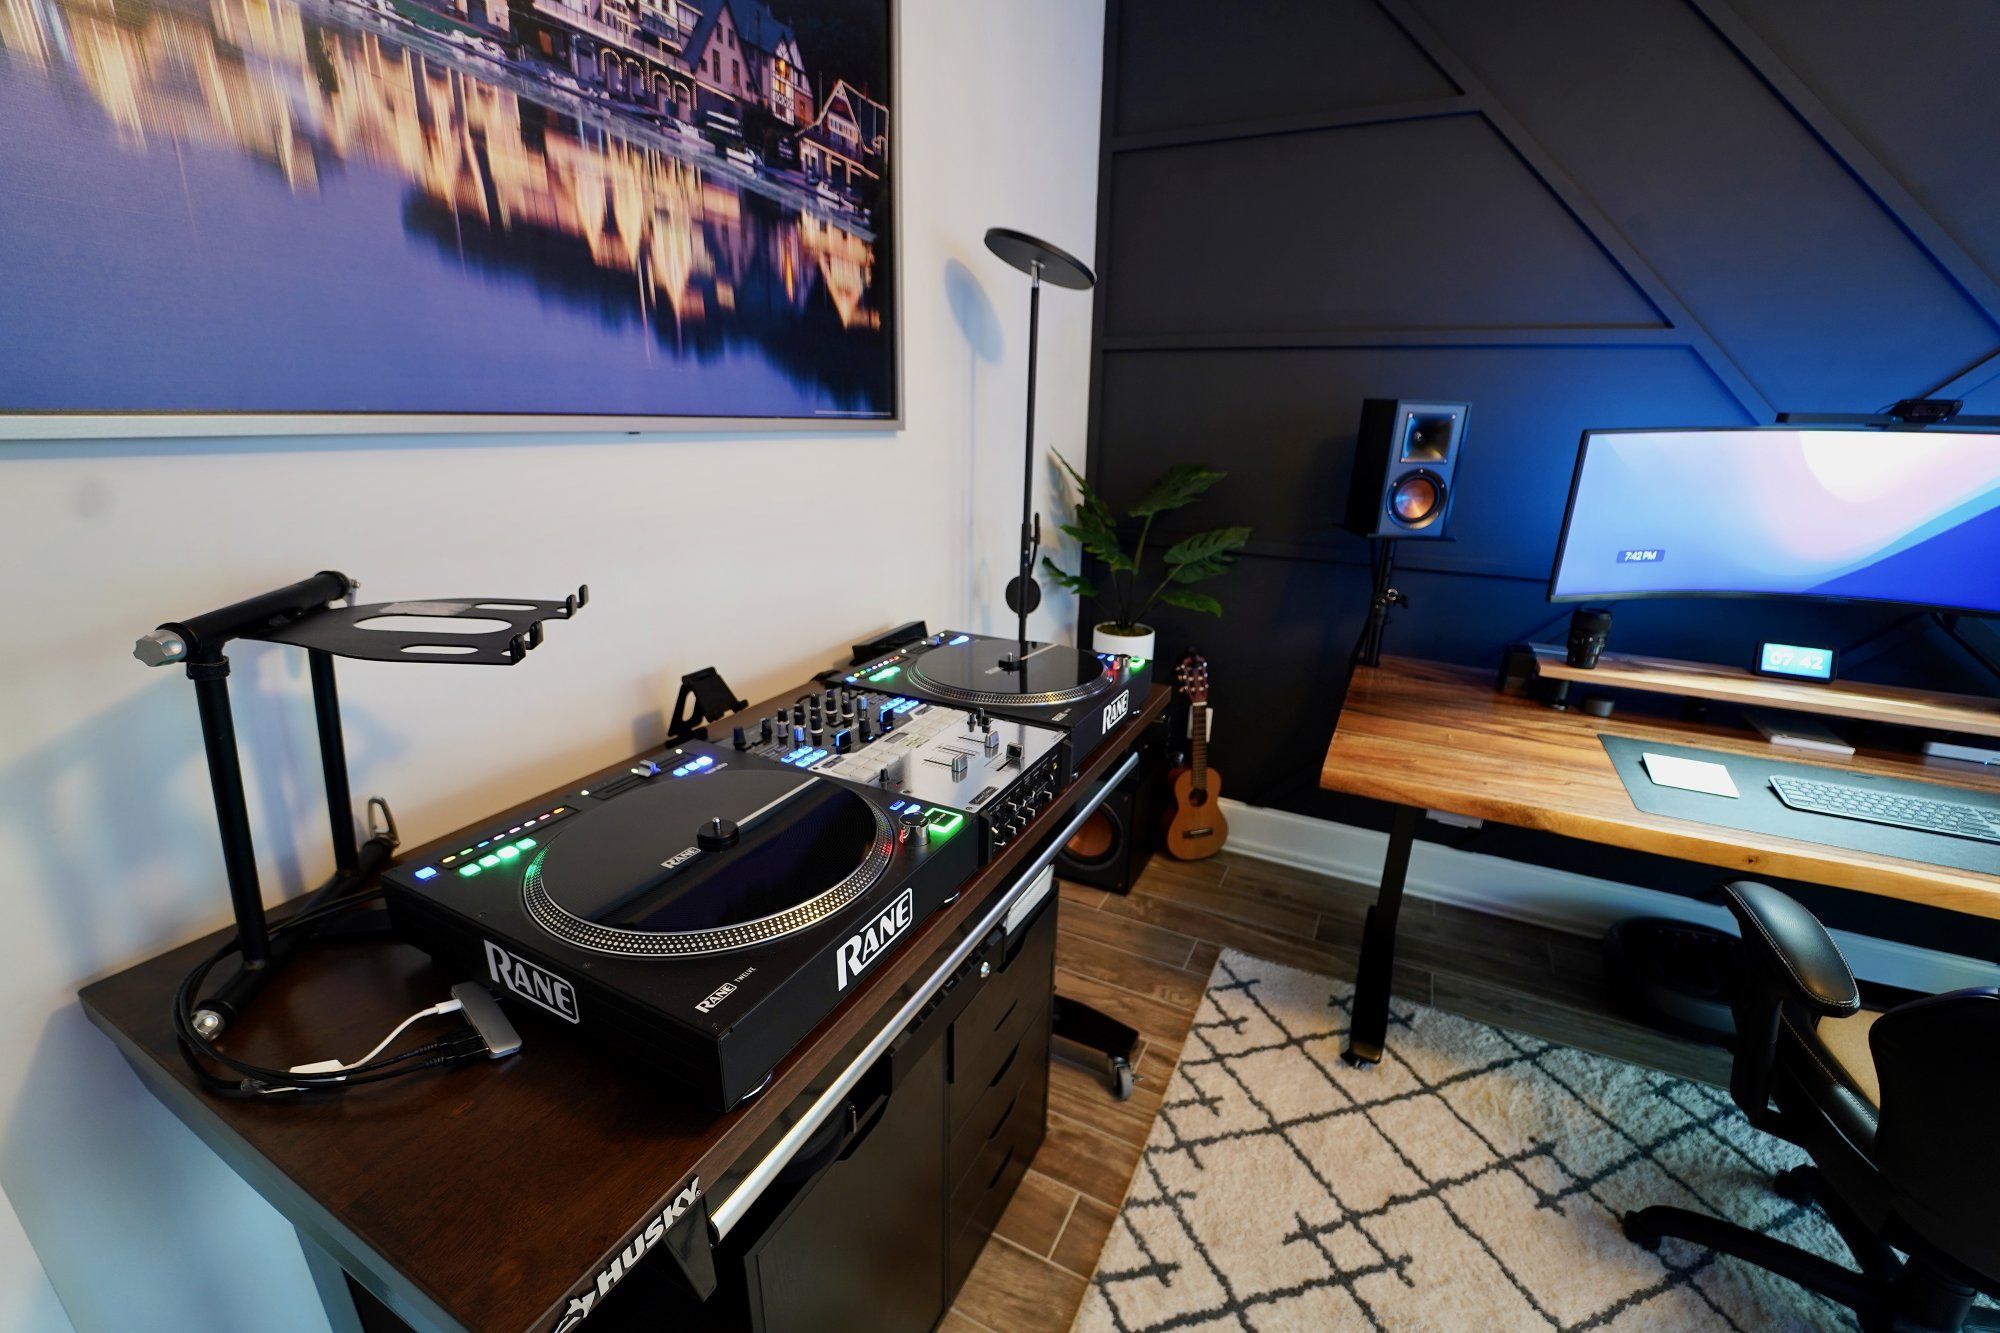 A DJ setup next to the WFH setup in a home office